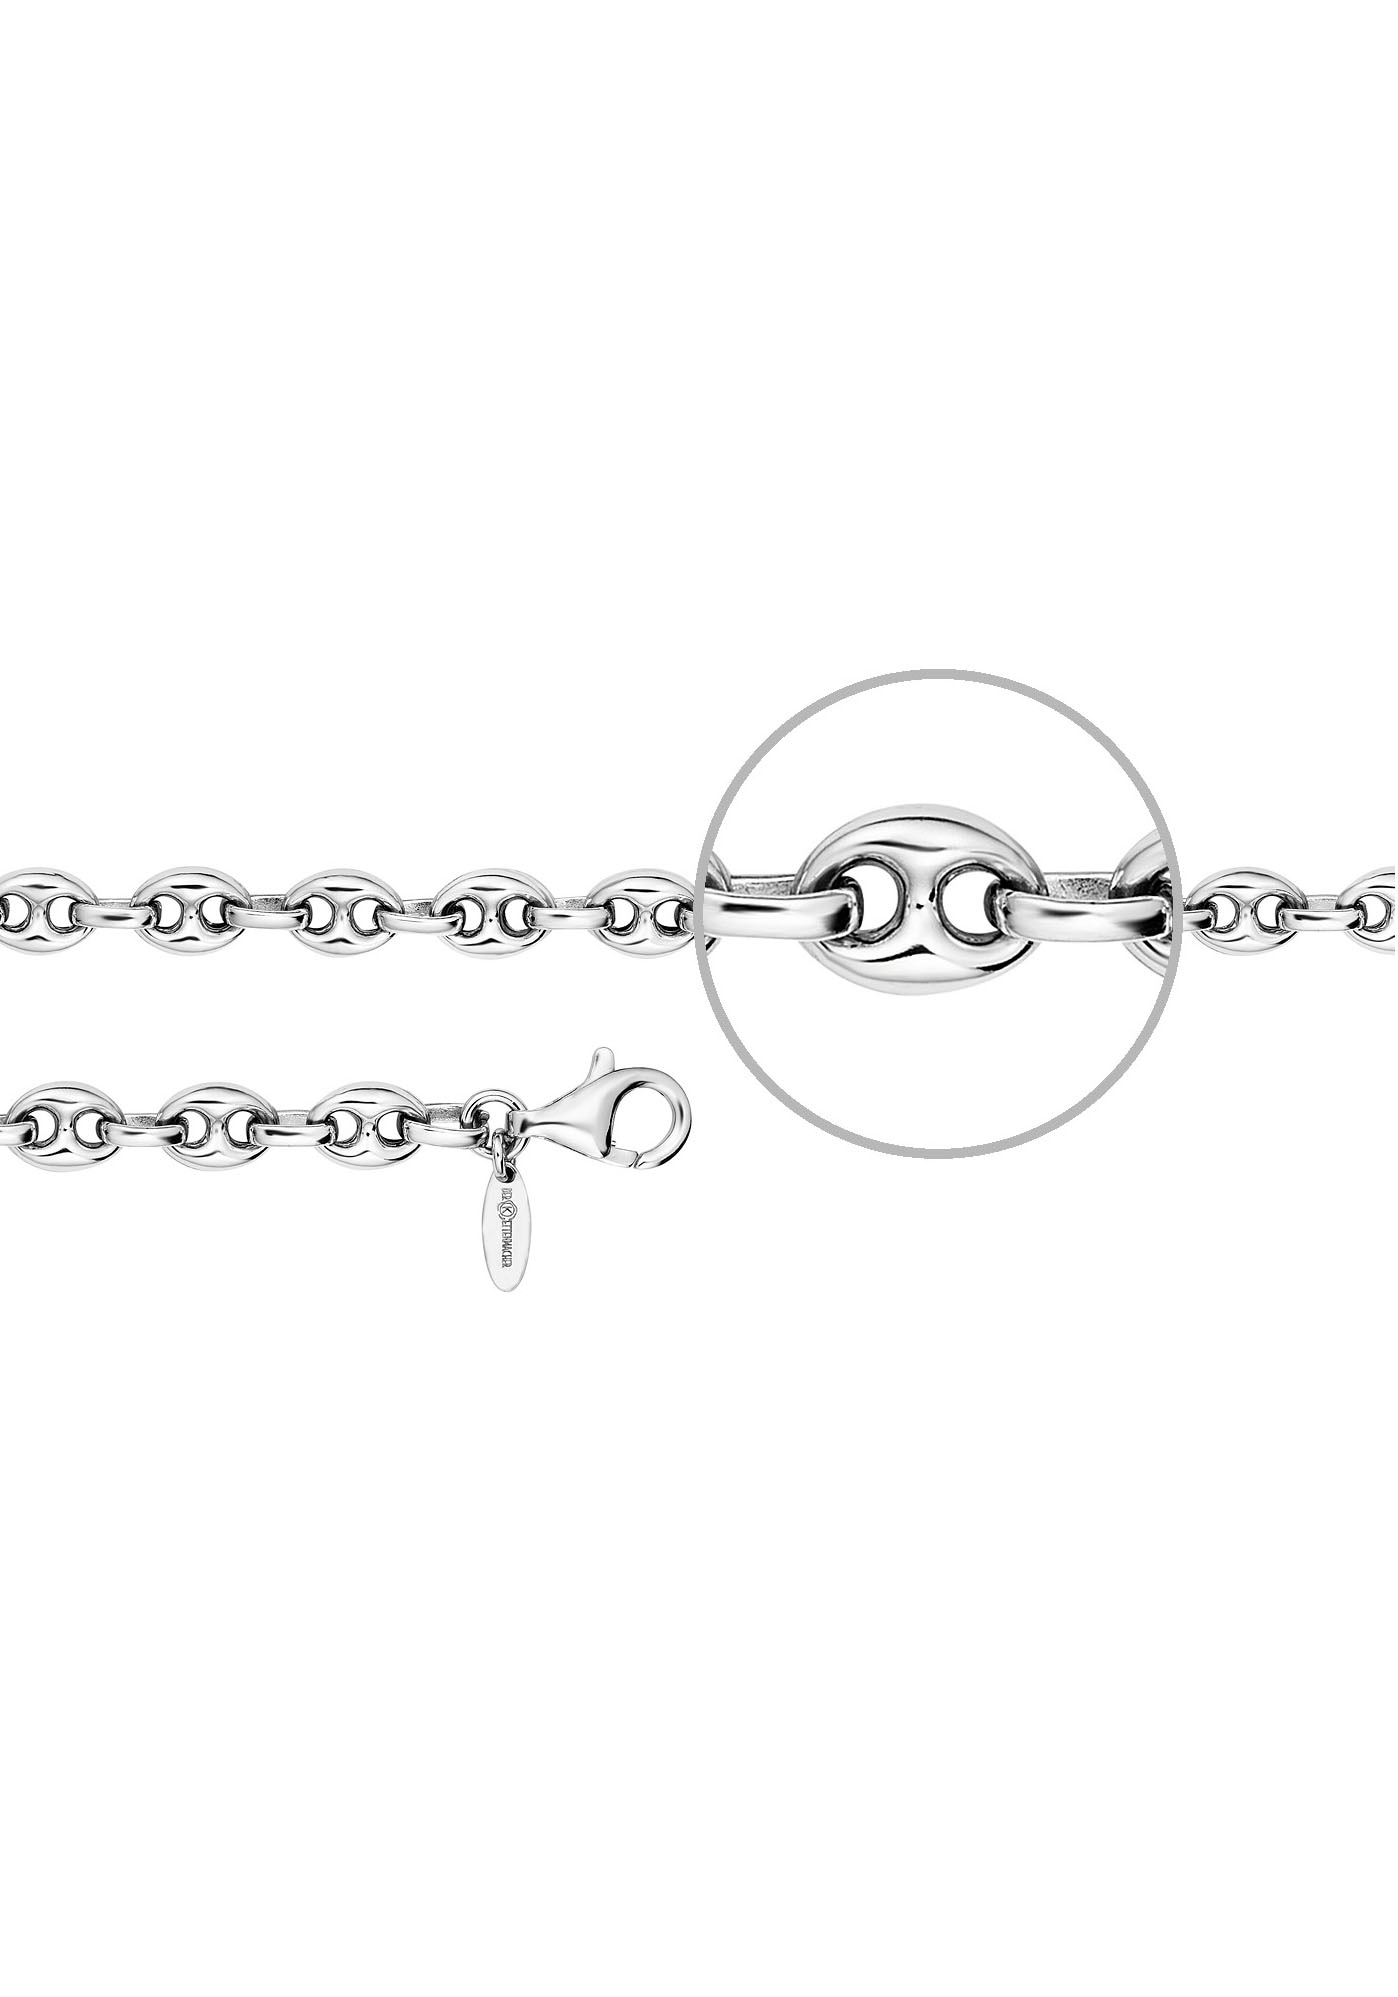 Der Kettenmacher Silberkette »Schiffsankerkette, ca. 6,5 mm breit, CK1-S«